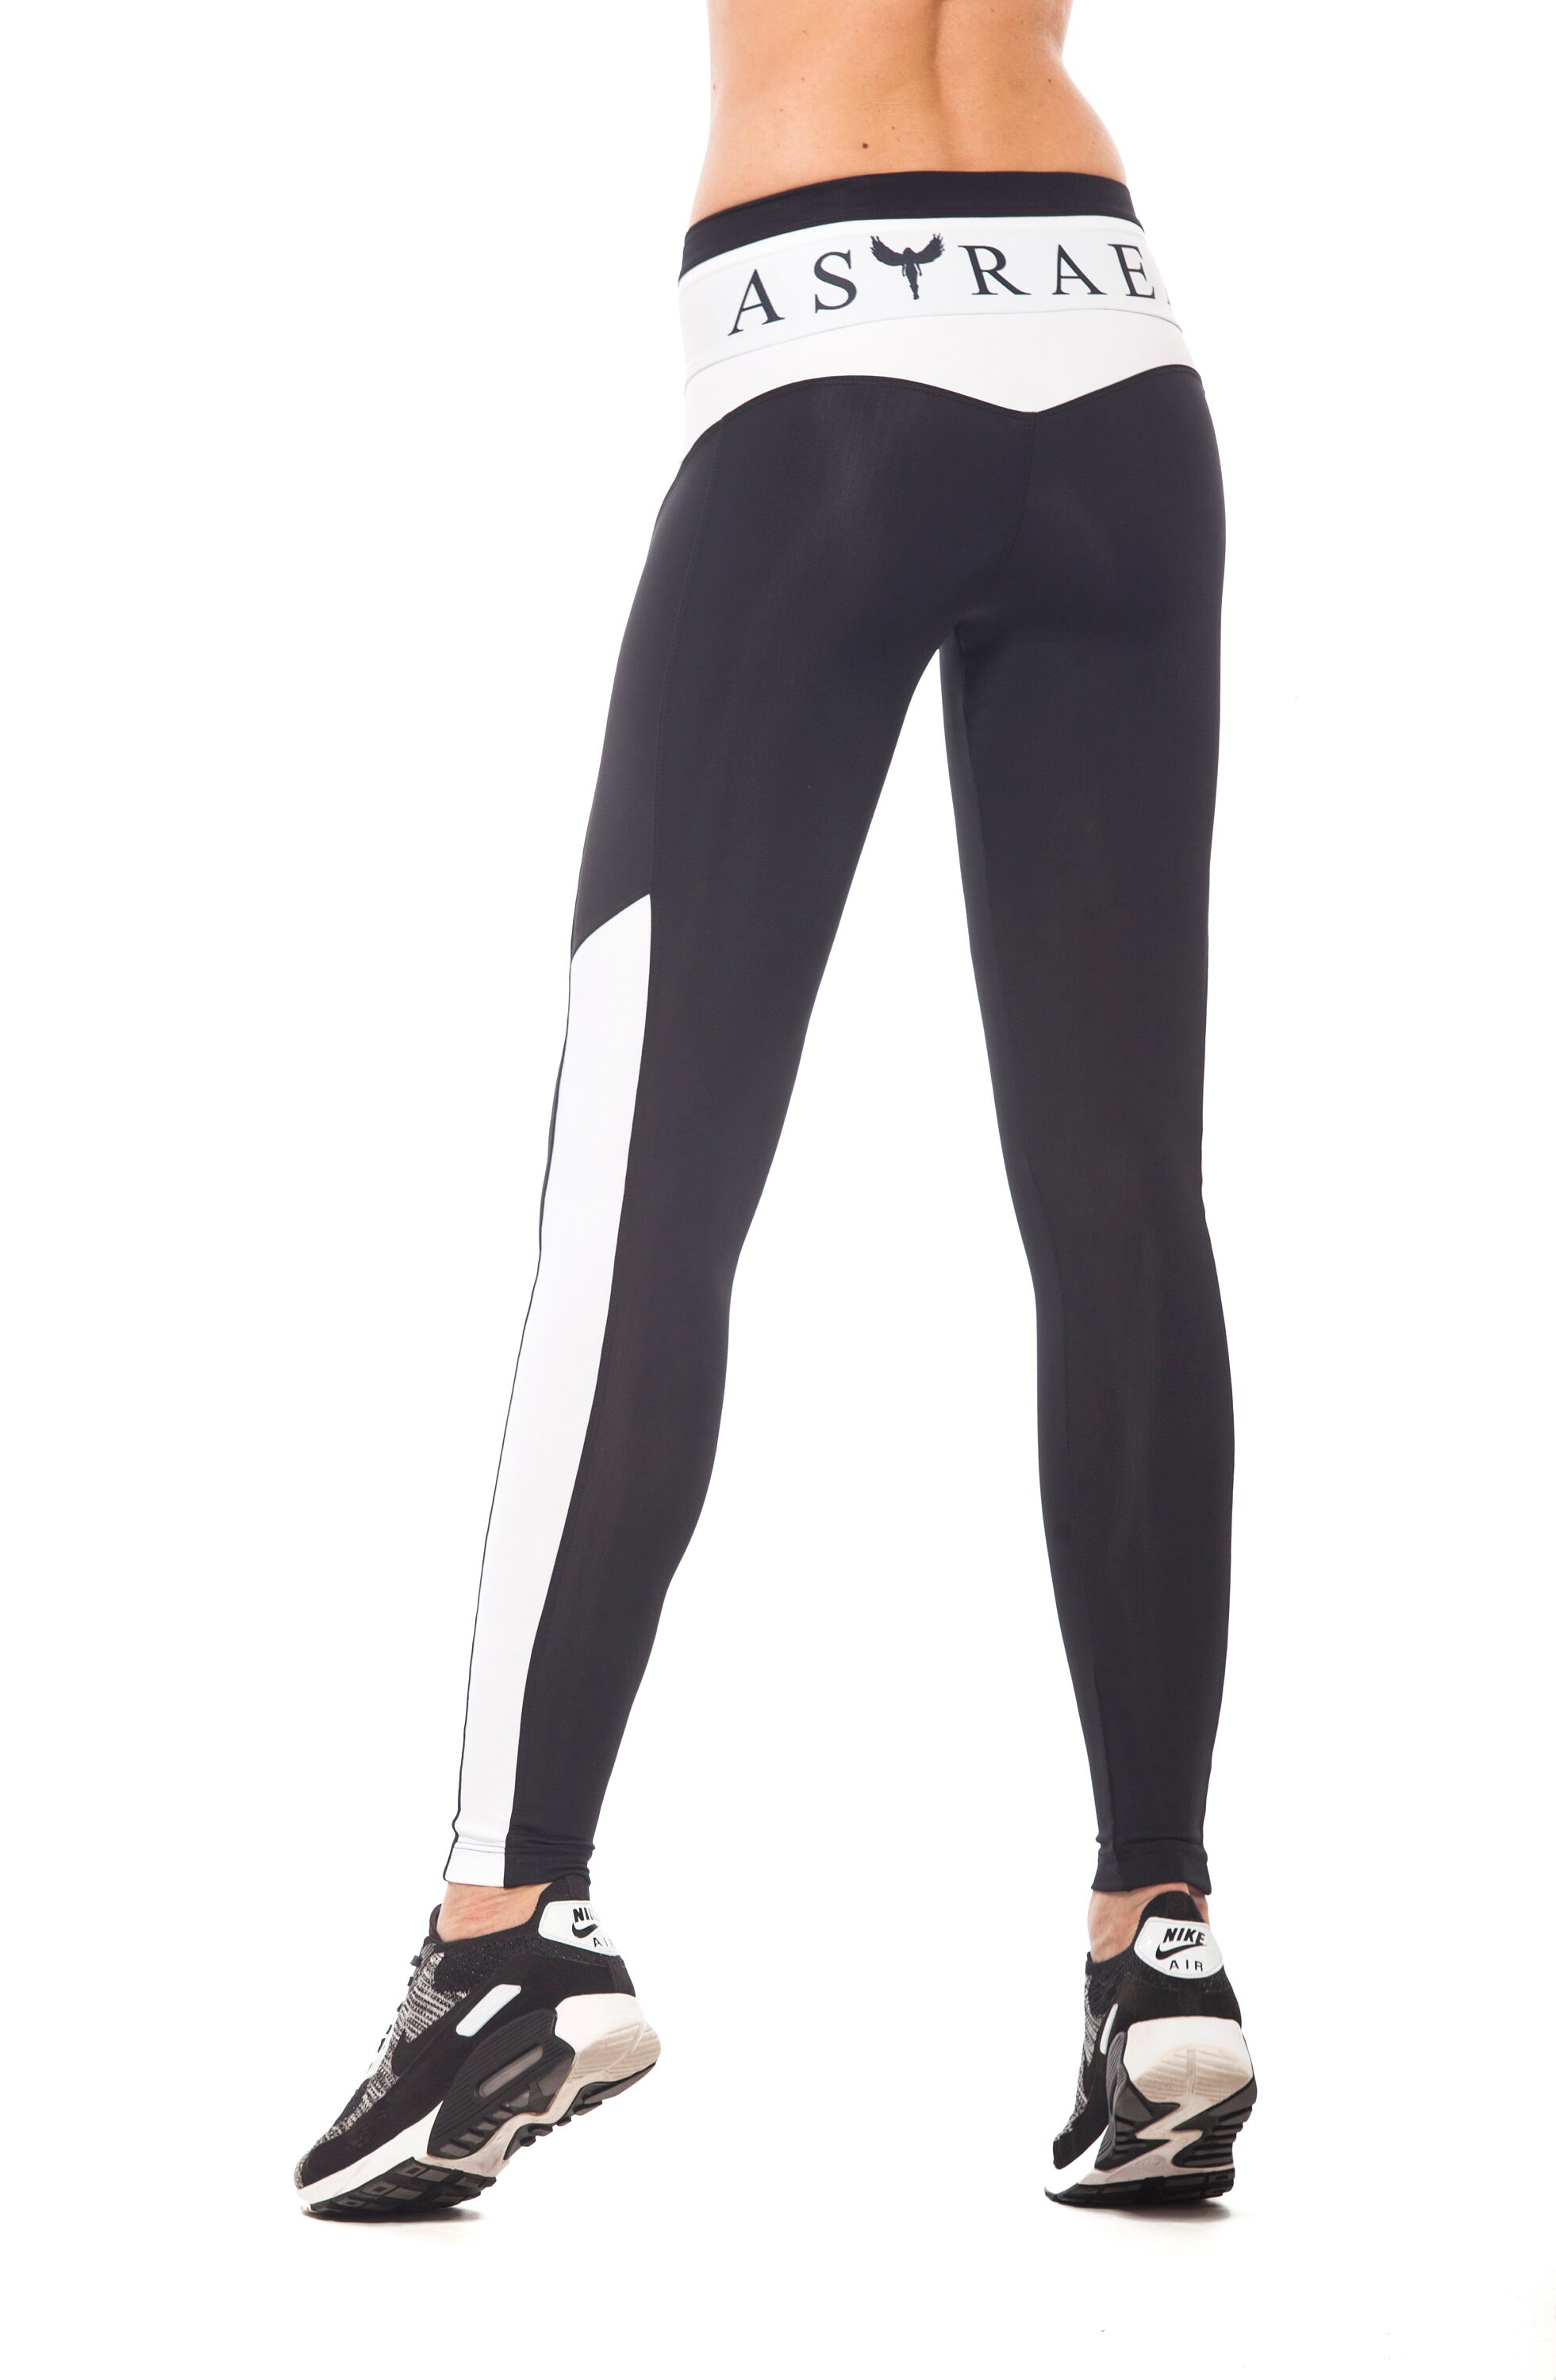 Activewear Set Sports BraBlack Leggings YogaFitness | Etsy